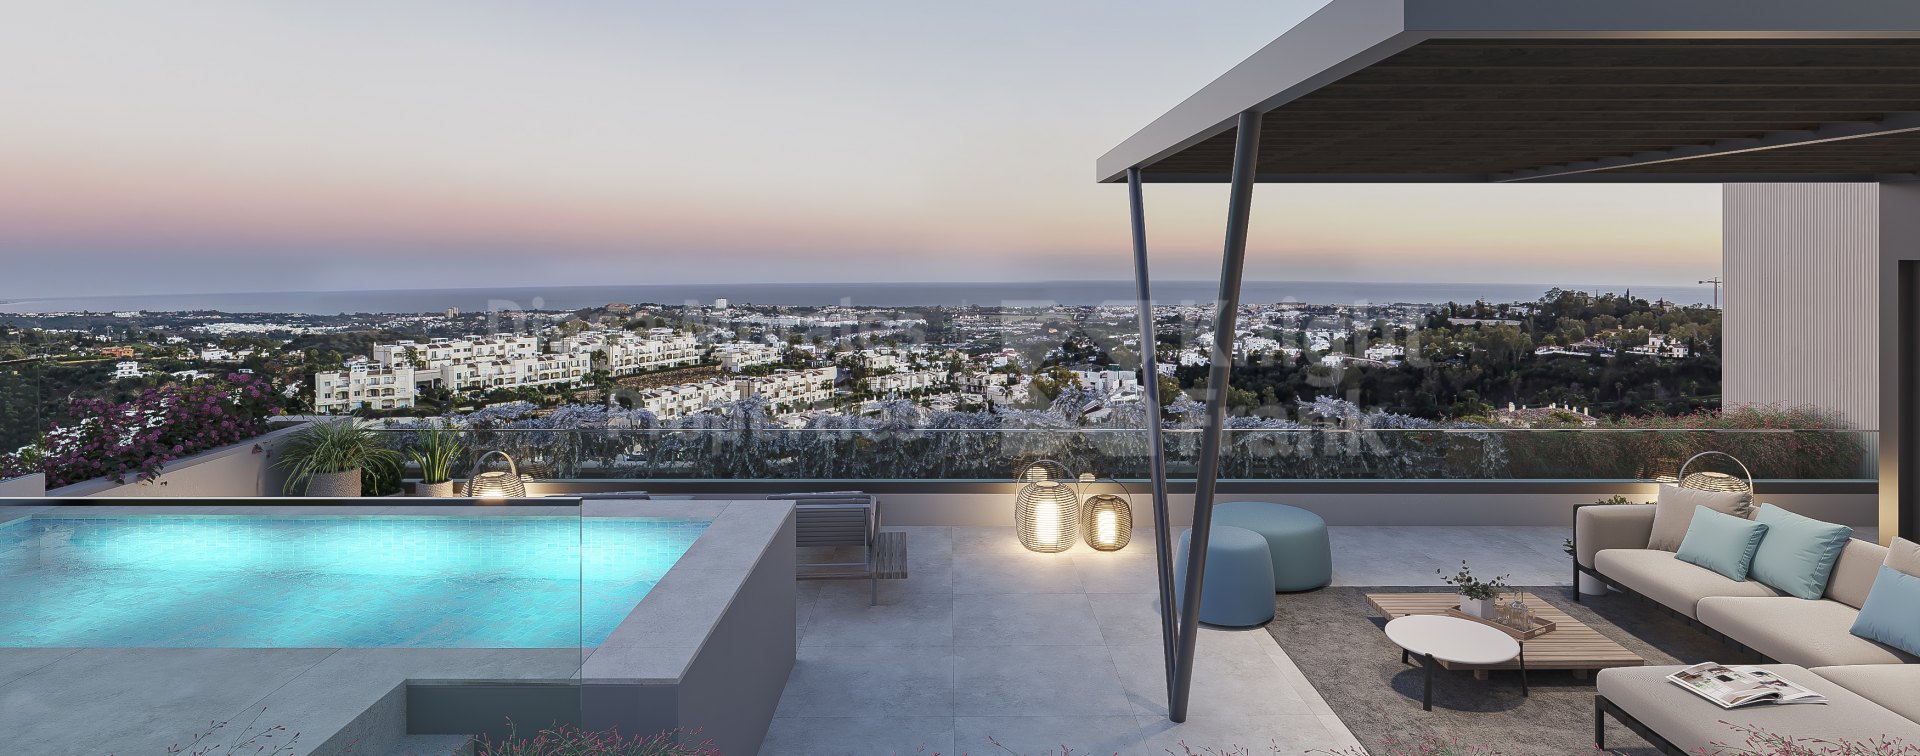 Las Colinas de Marbella, Penthouse mit großer Sonnenterrasse und privatem Swimmingpool mit Panoramablick